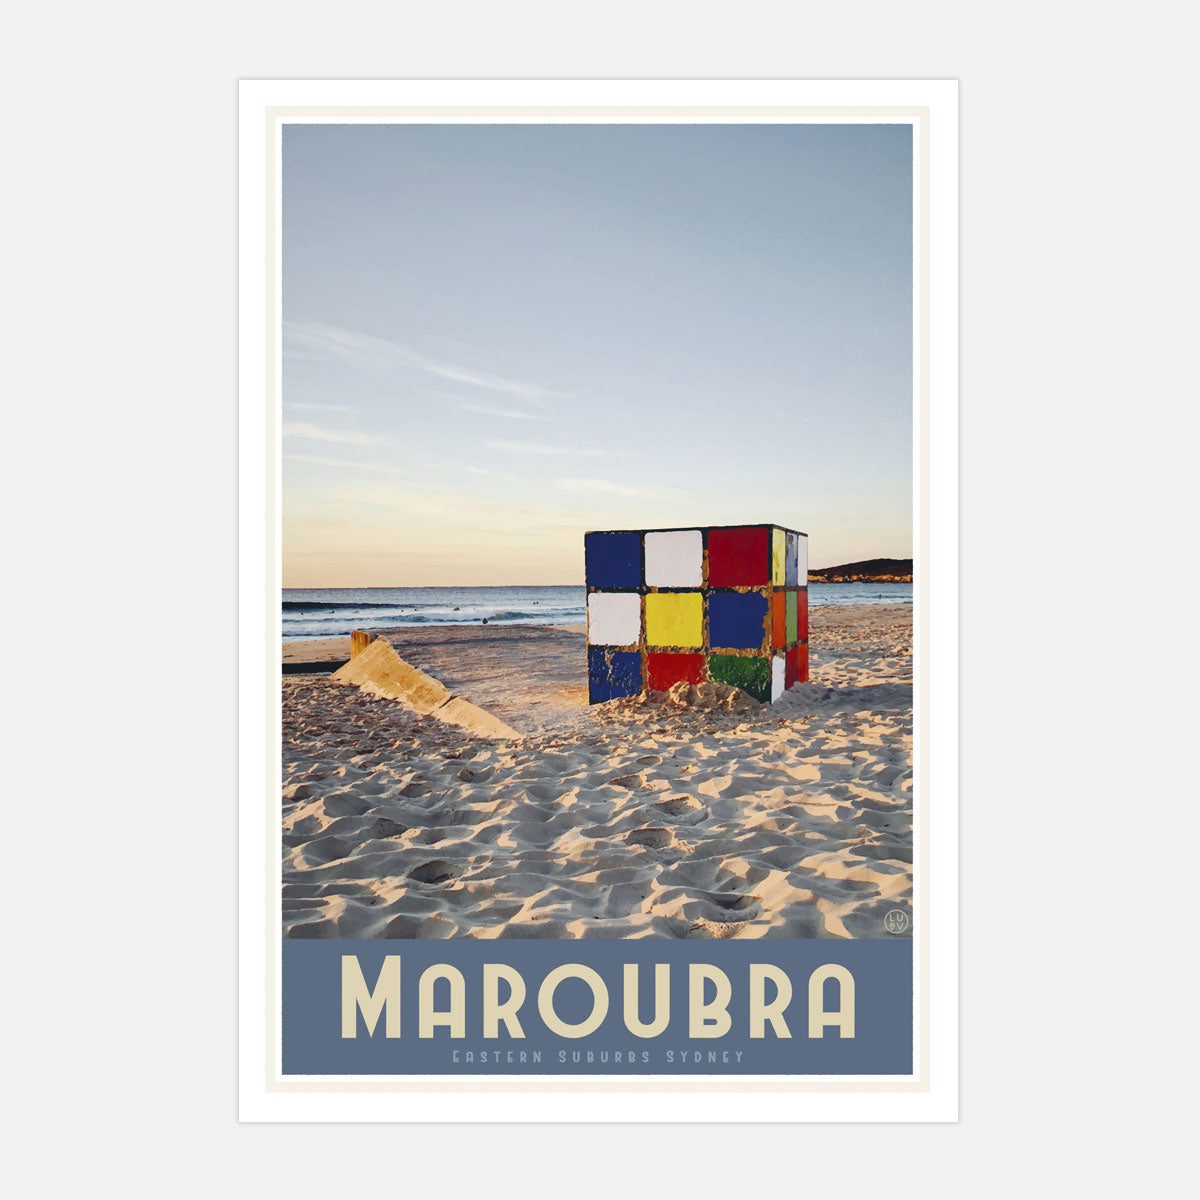 Maroubra cube vintage style travel print by places we luv